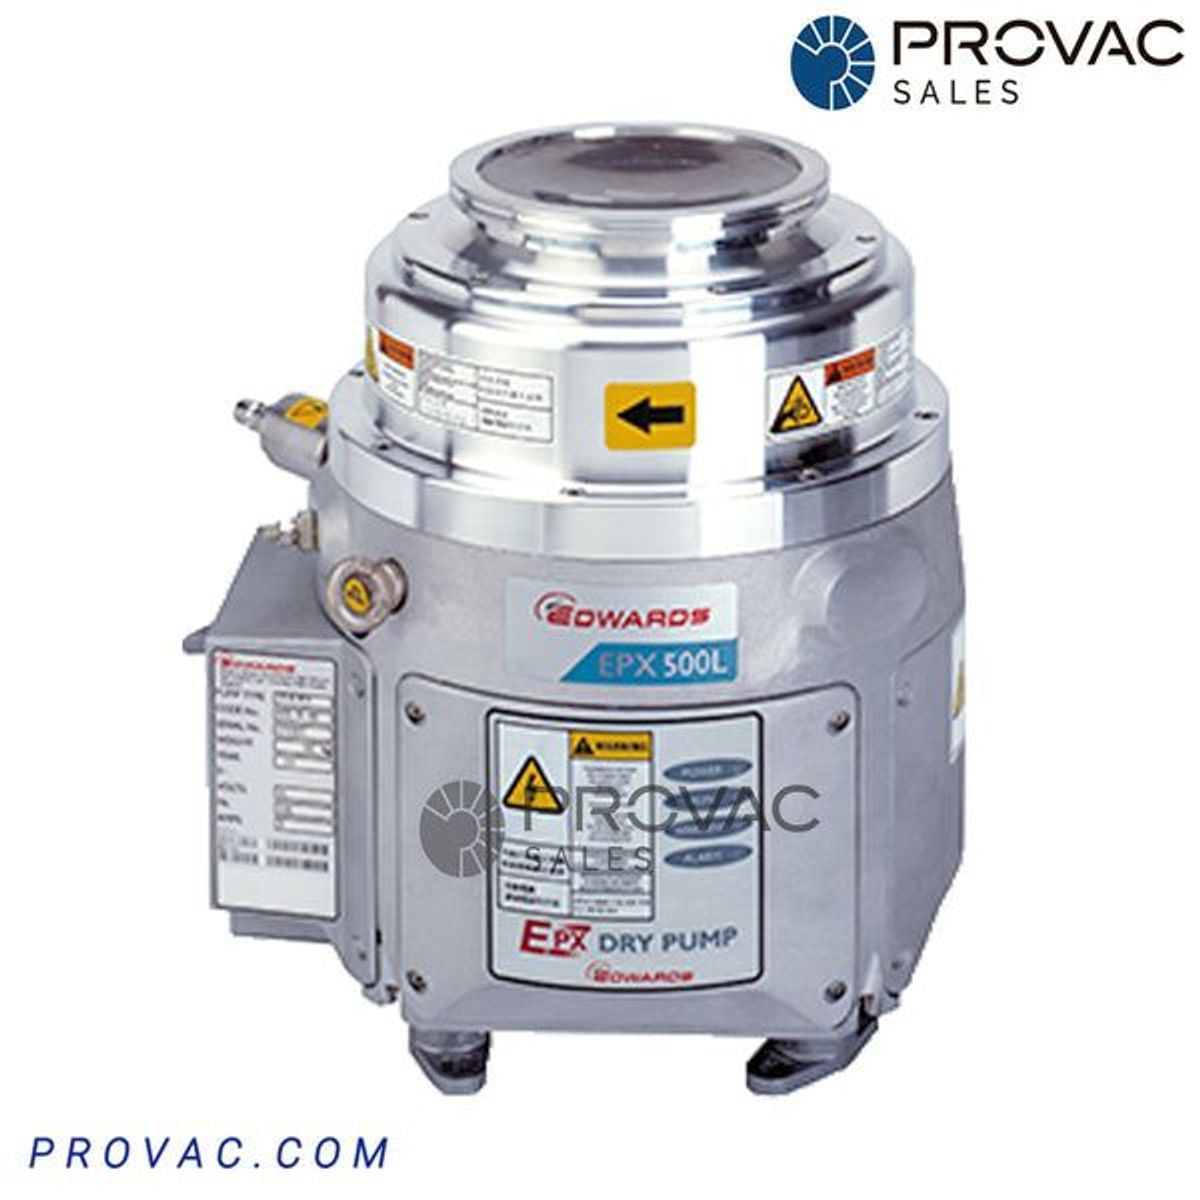 Edwards EPX-500LE Dry Pump Image 1